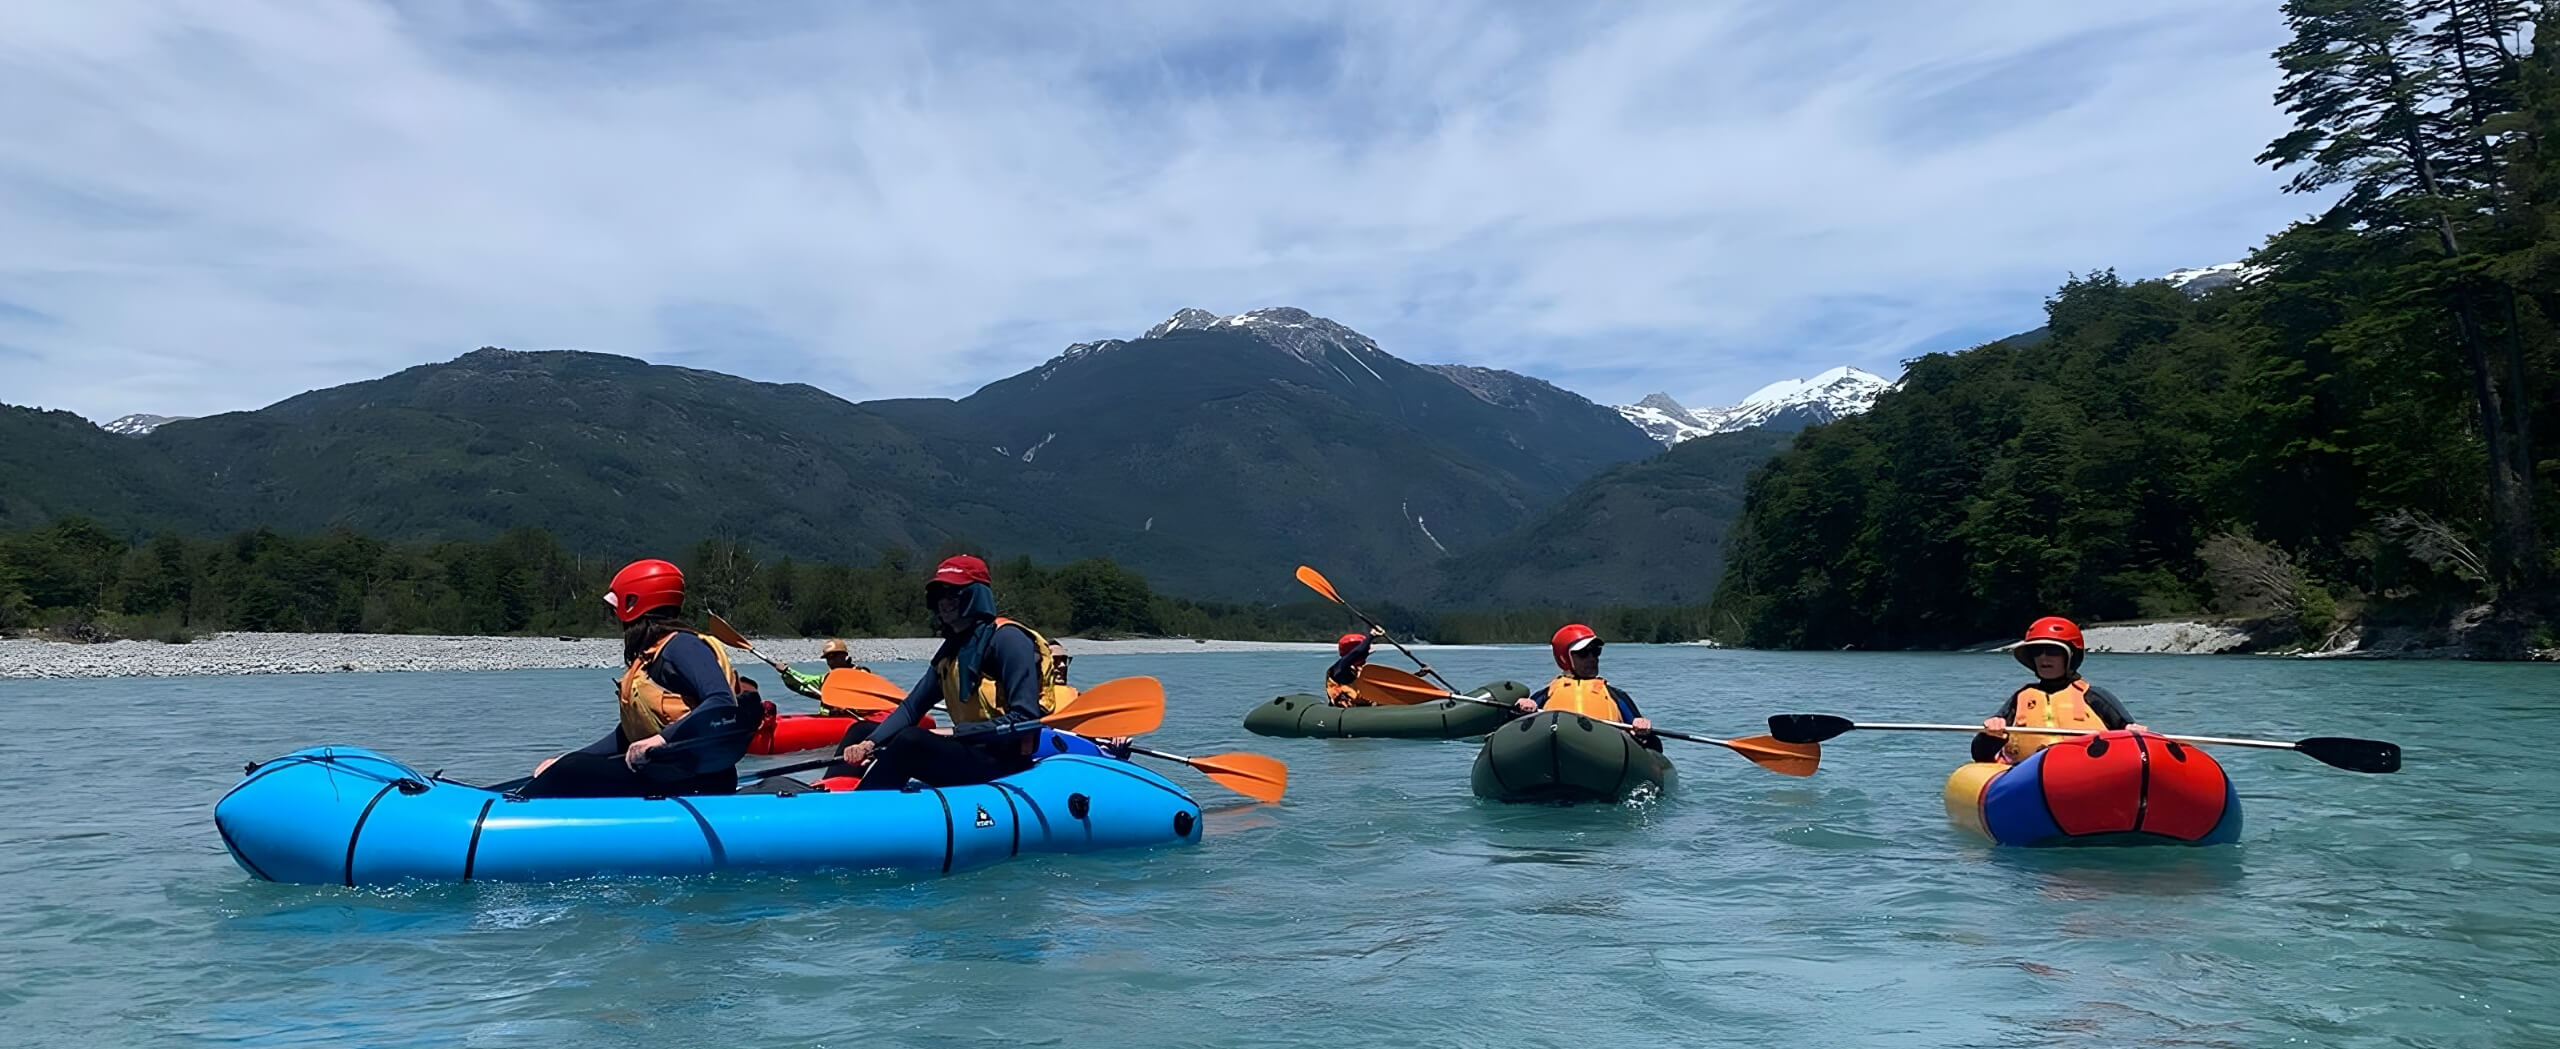 Lake District And Chiloe Archipelago Tour